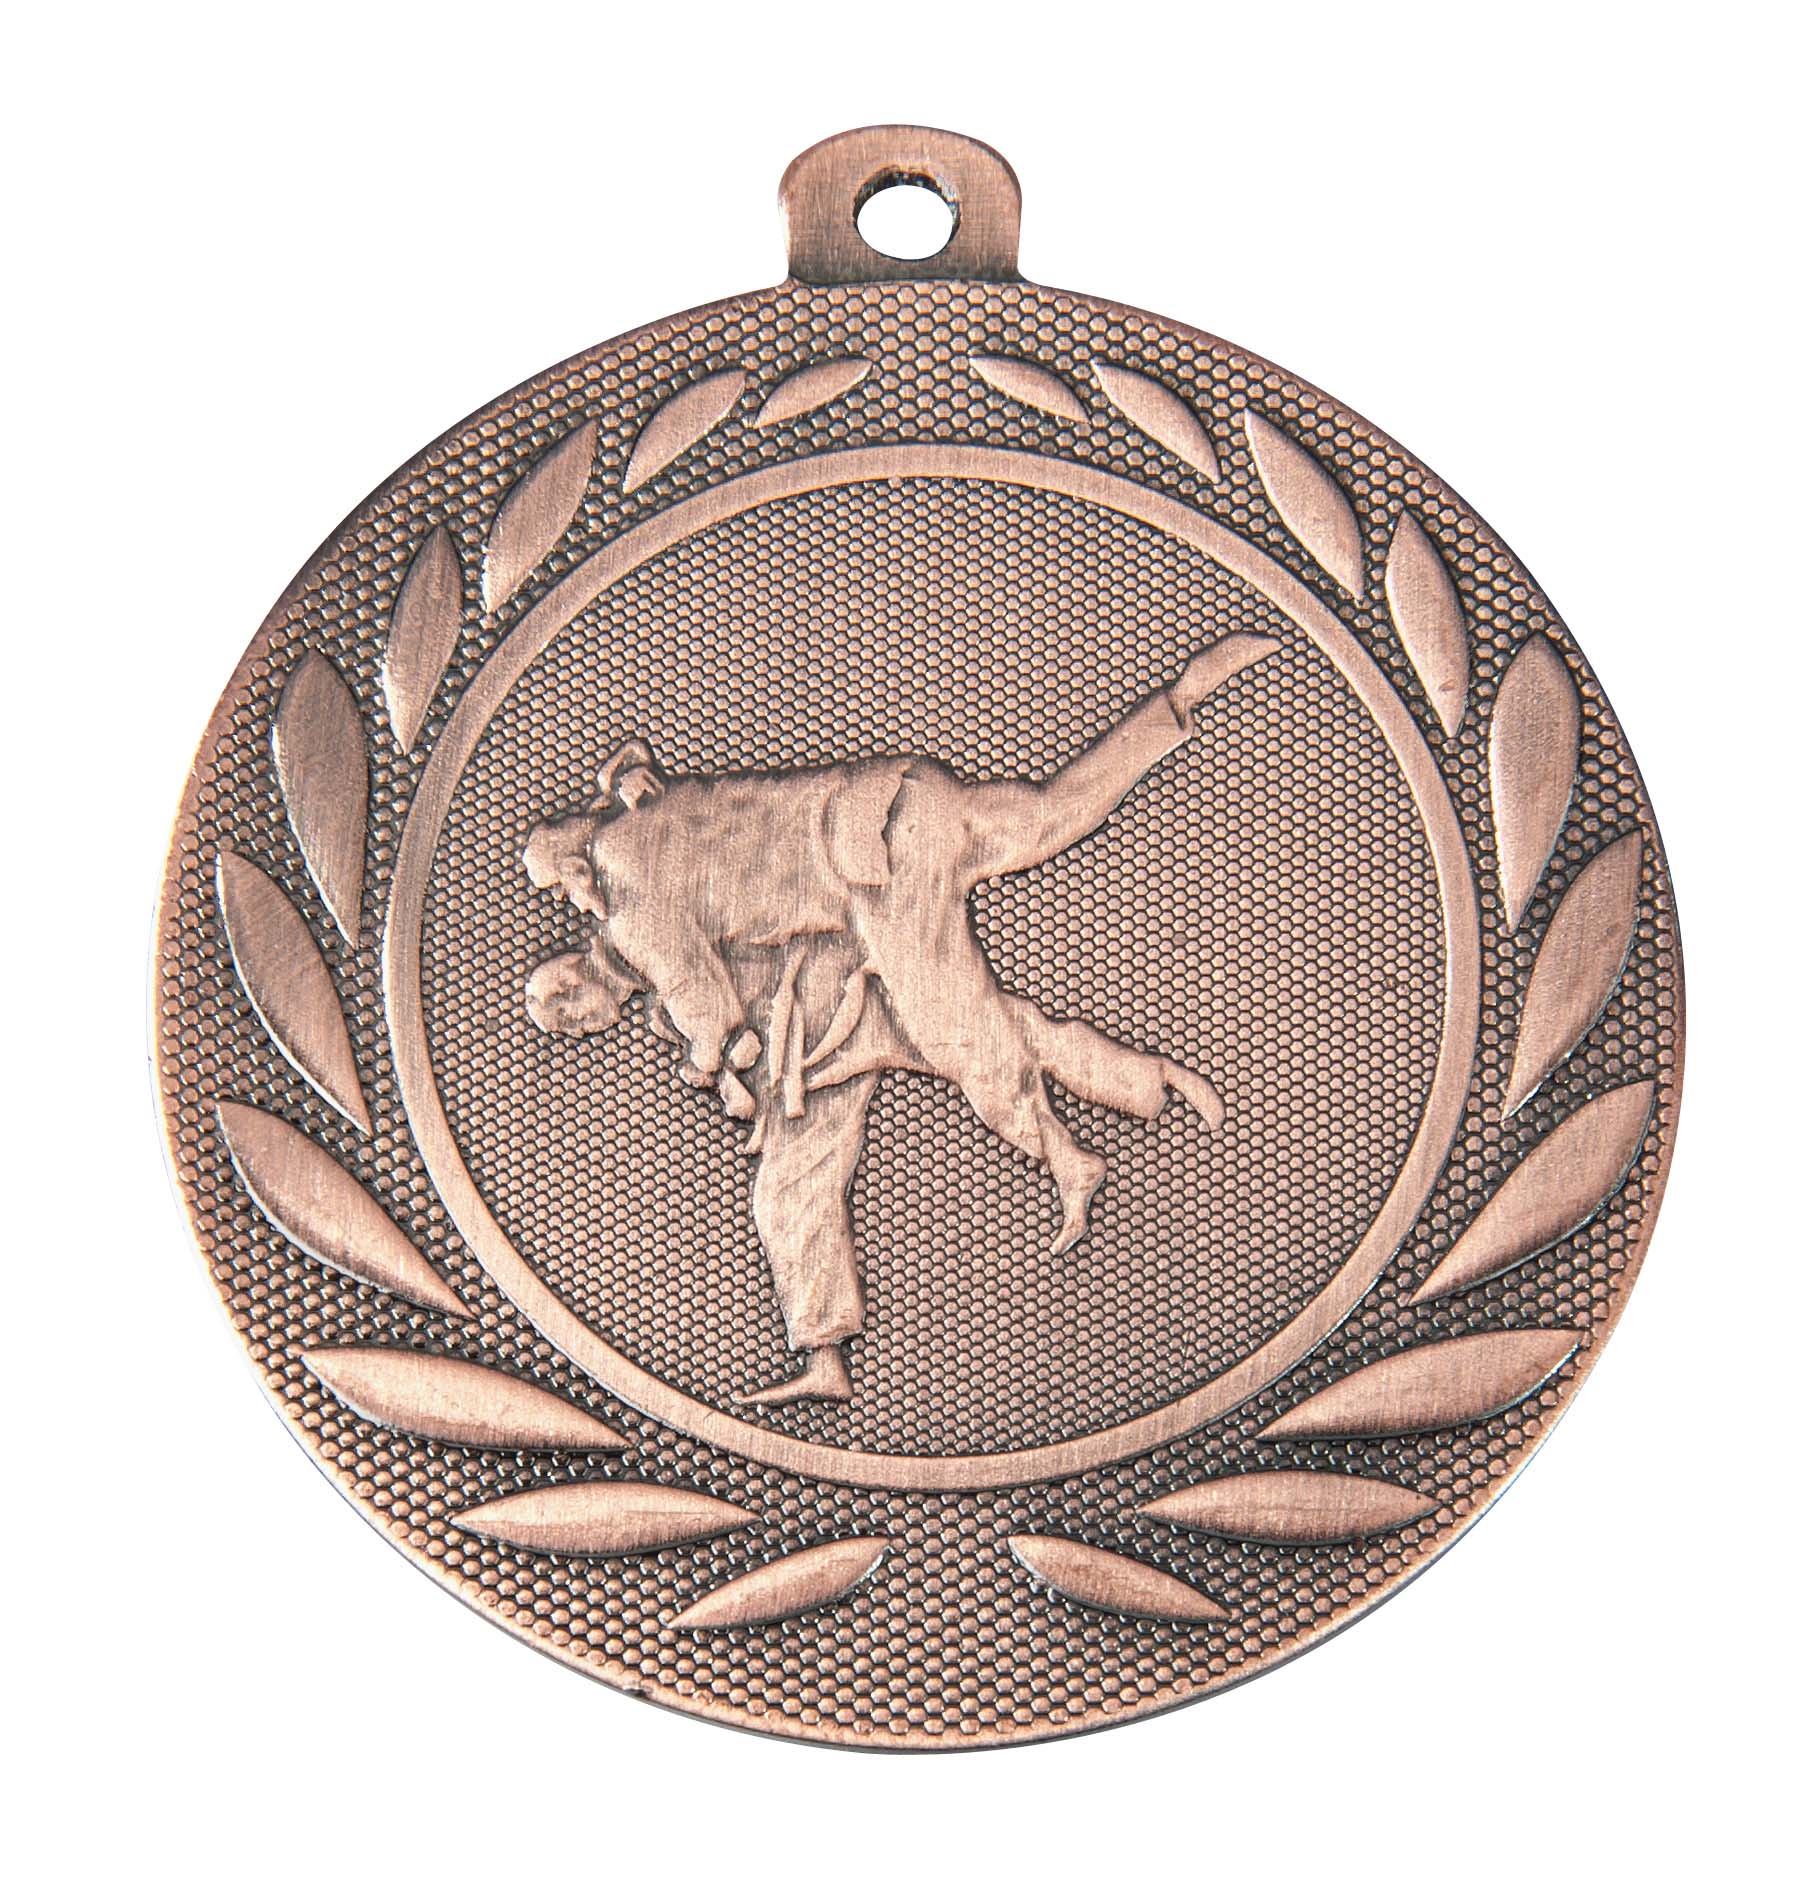 Judo-Medaille DI5000.I inkl. Band und Beschriftung Bronze Unmontiert